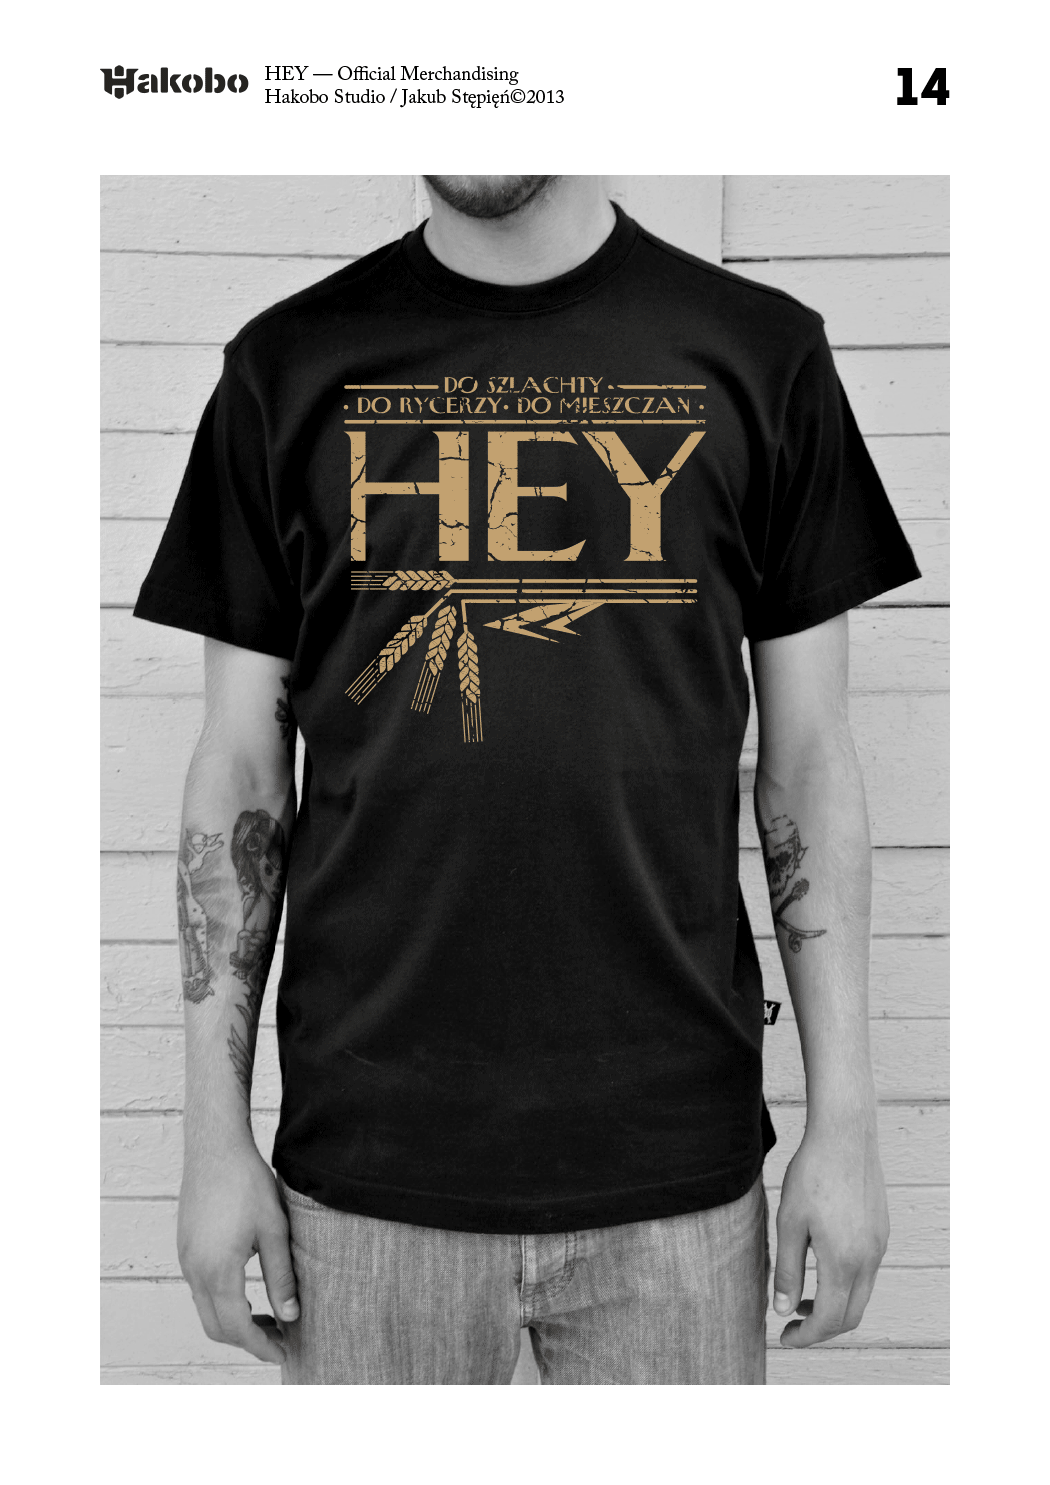 hey-band-merch-hakobo-jakub-stepien-prints-t-shirt-14